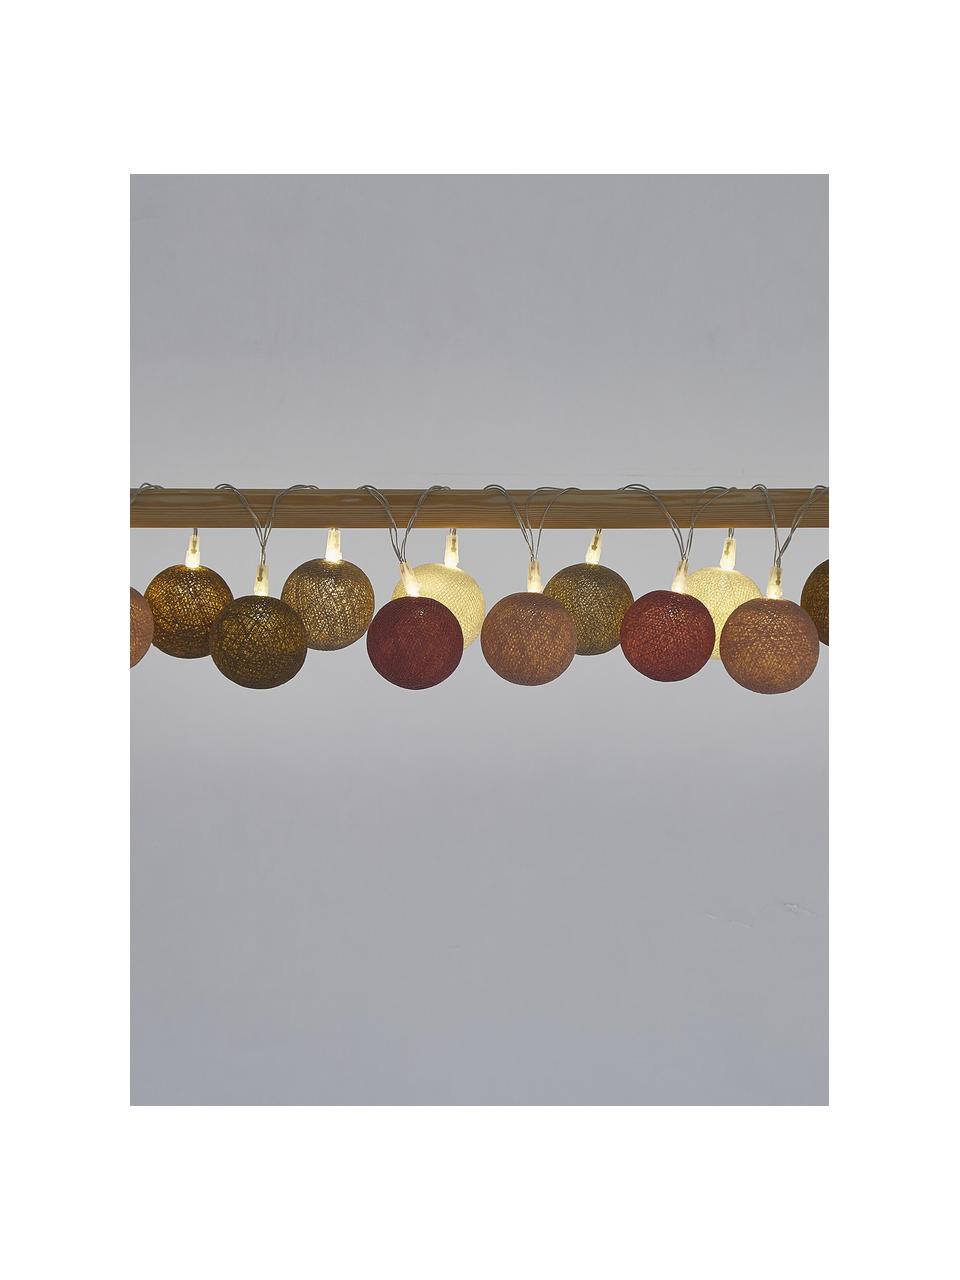 LED lichtslinger Colorain, 378 cm, Lampions: polyester, WFTO gecertifi, Beige-, bruin-, rozetinten, L 378 cm